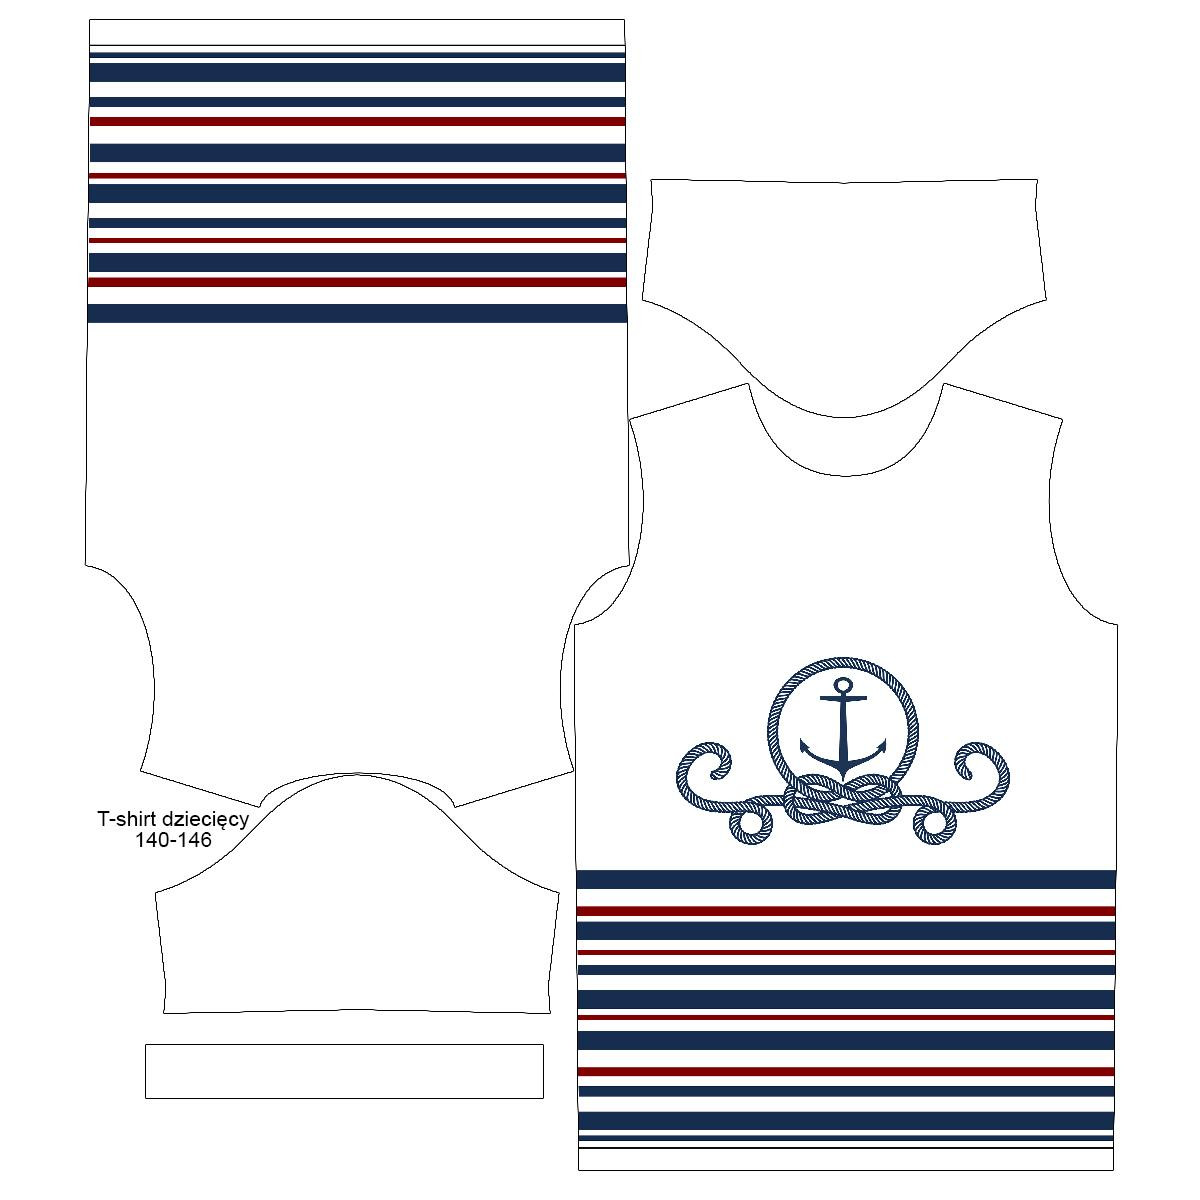 KID’S T-SHIRT -  ANCHOR / stripes (marine) - single jersey 